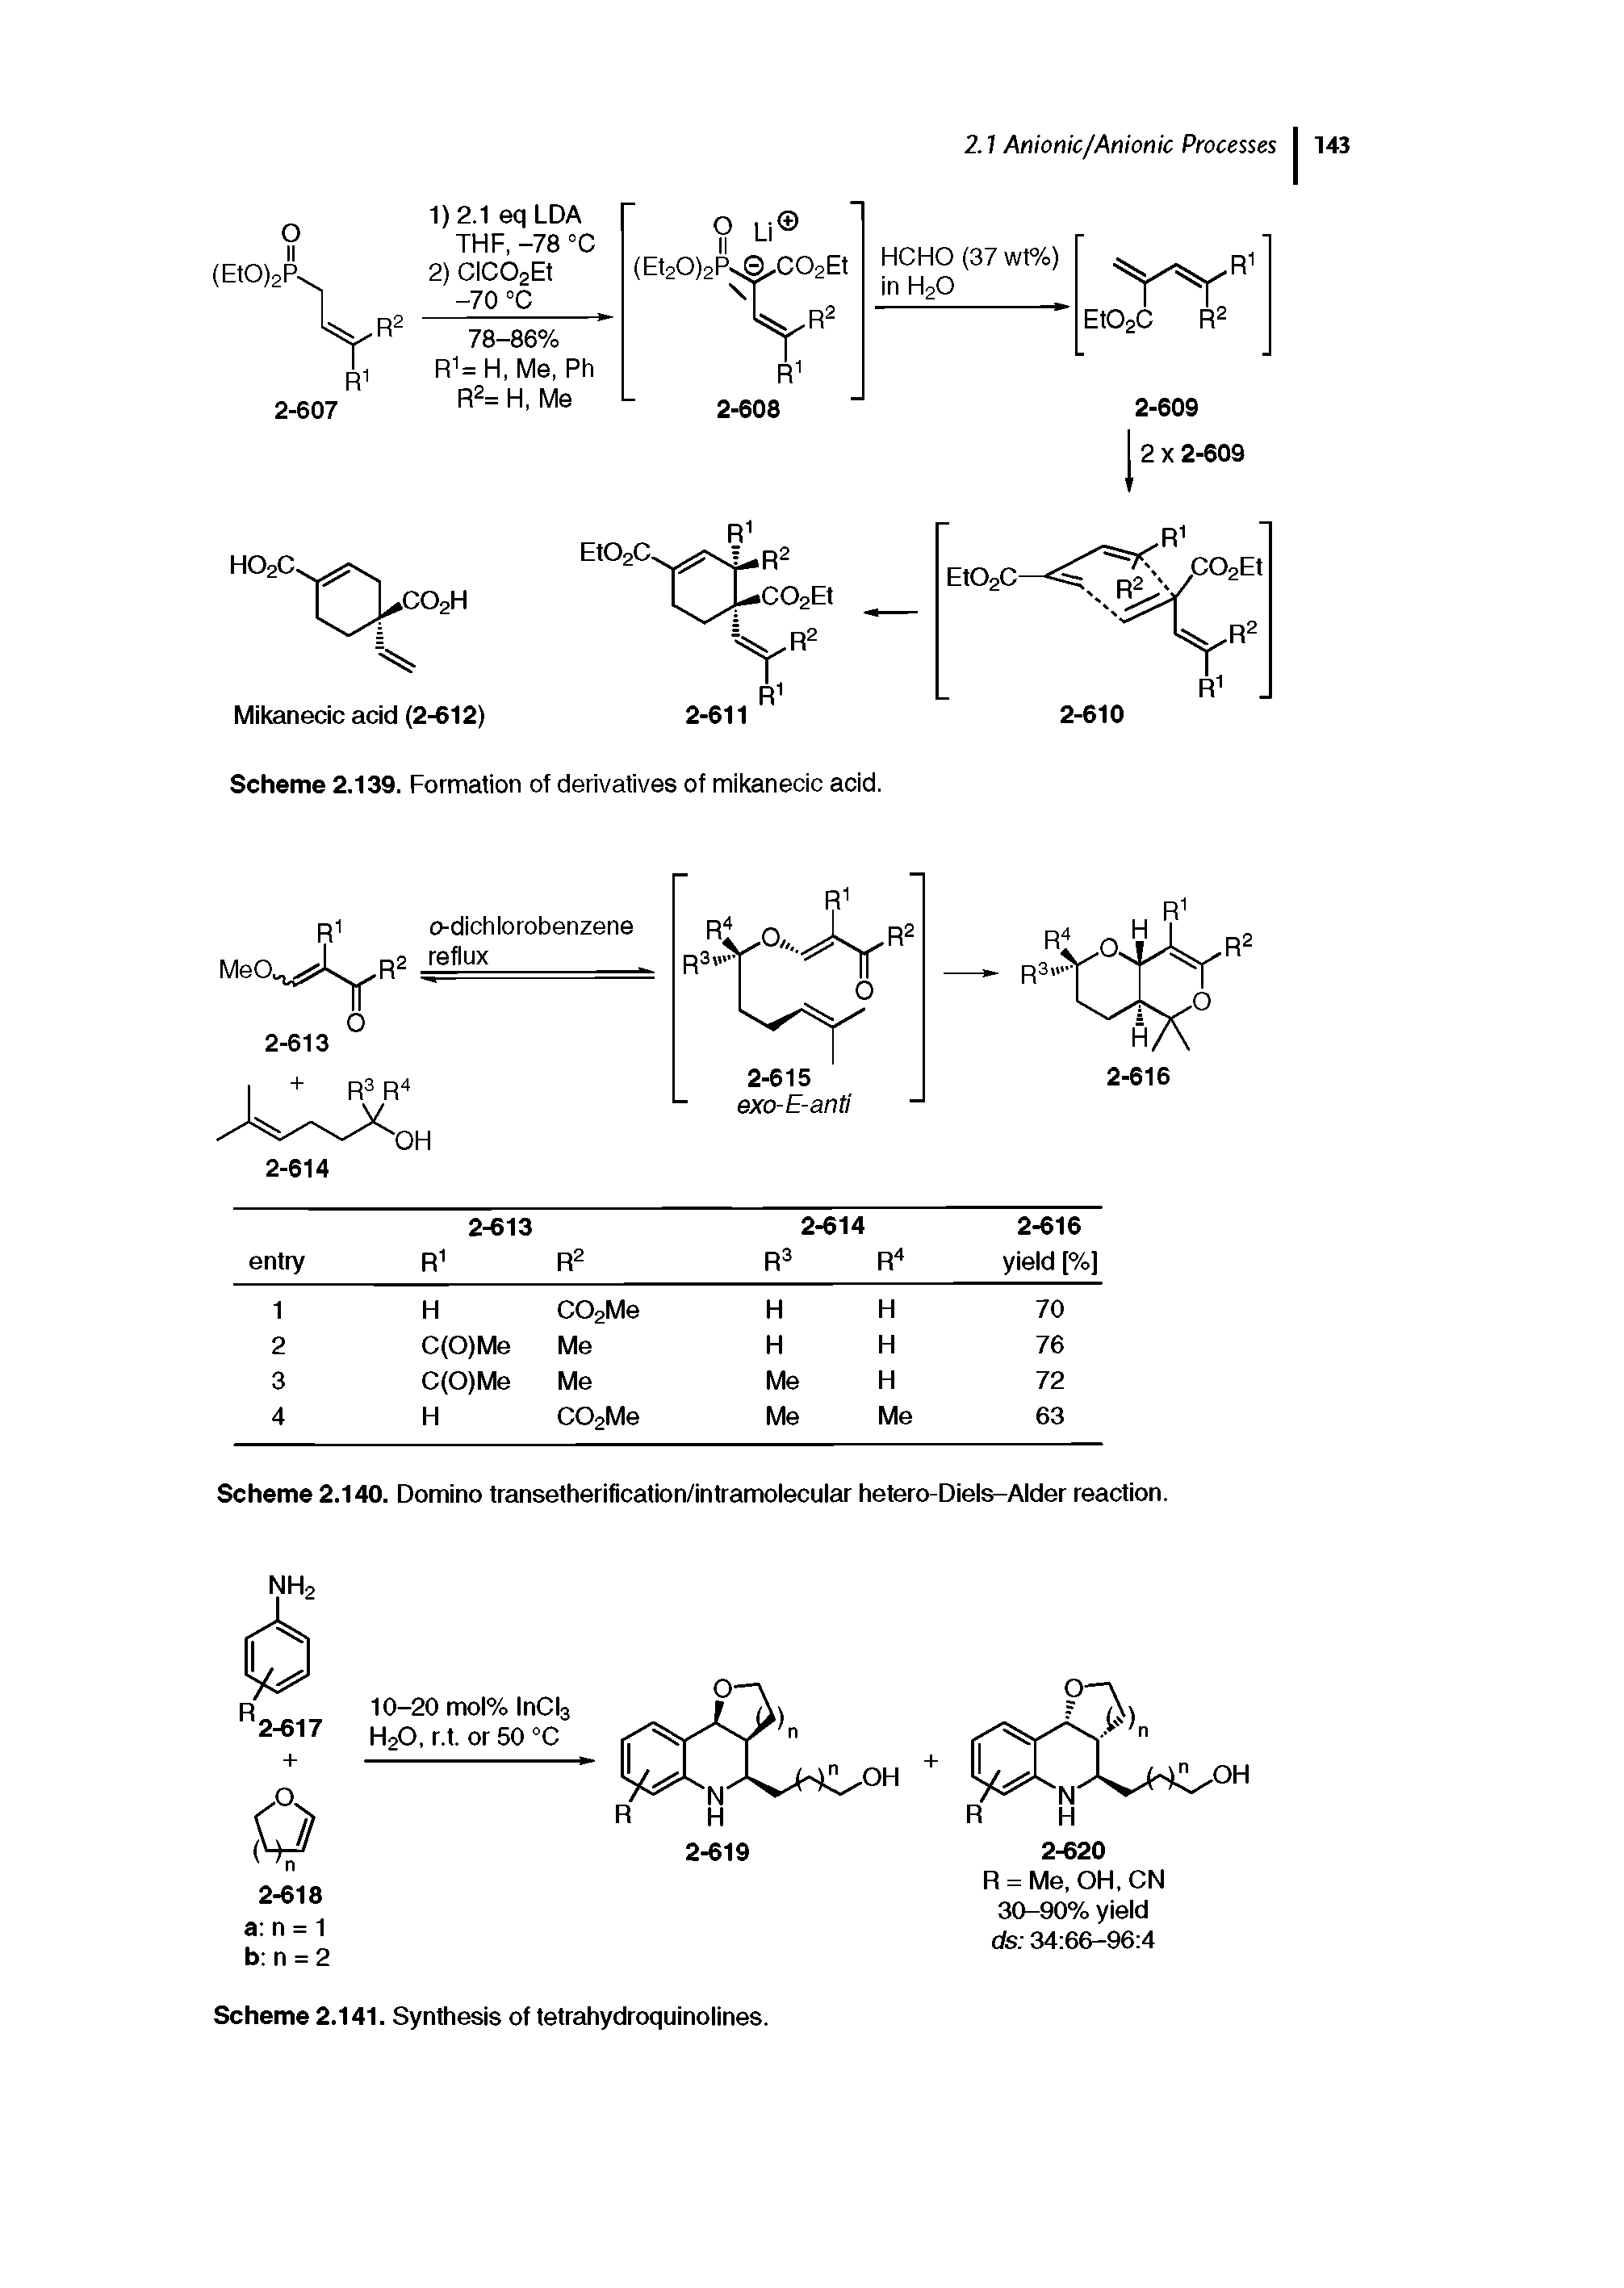 Scheme 2.140. Domino transetherification/intramolecular hetero-Diels-Alder reaction.